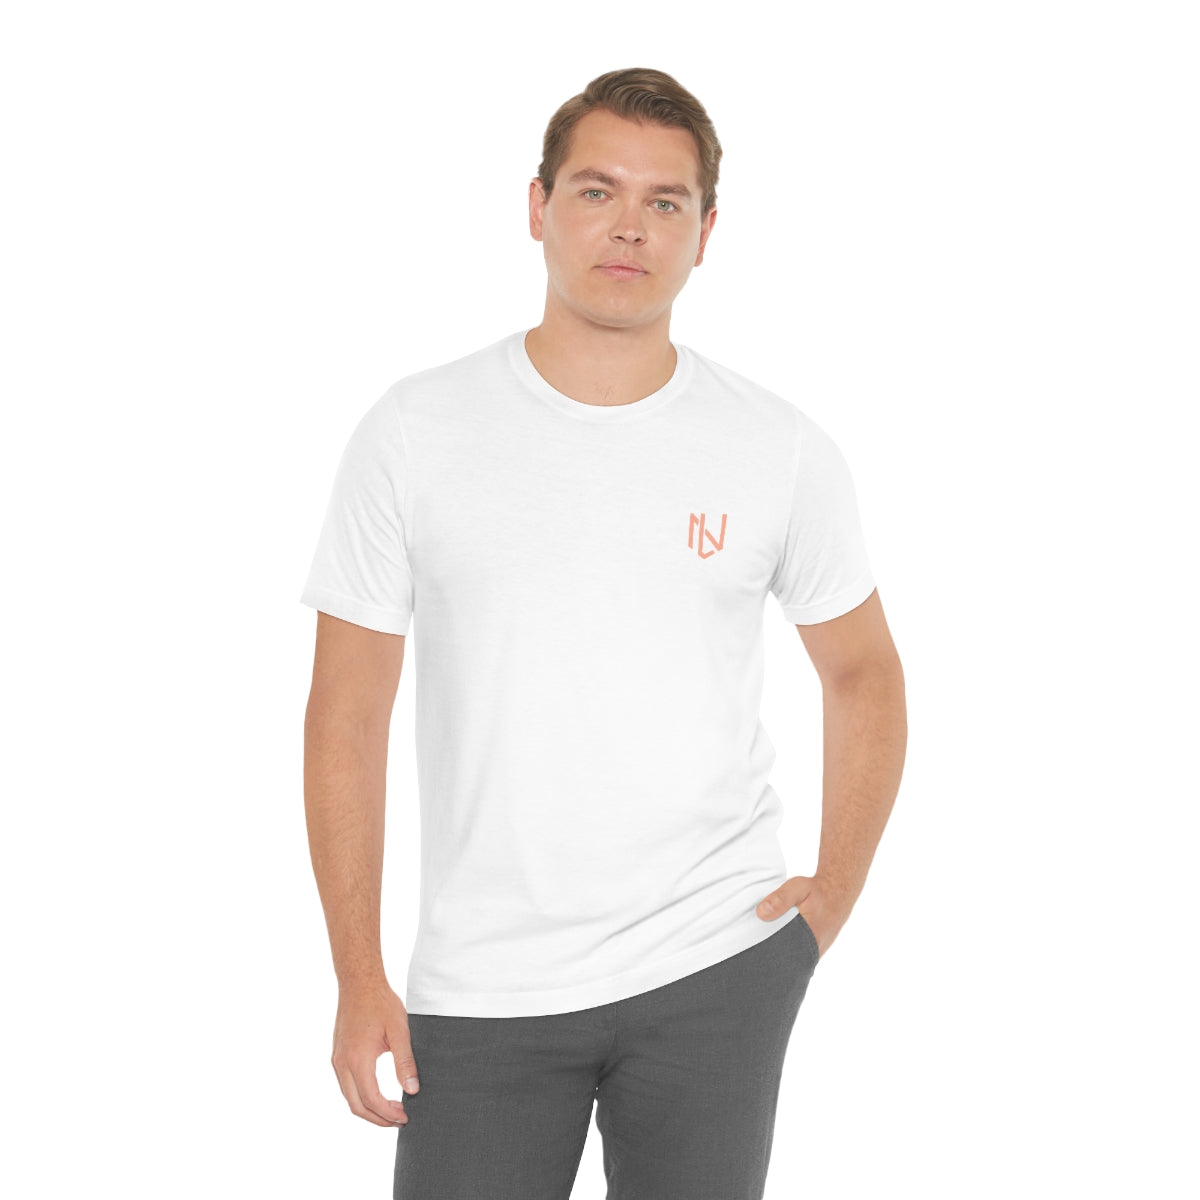 Vibes O' Clock Unisex Shirt (Peach)